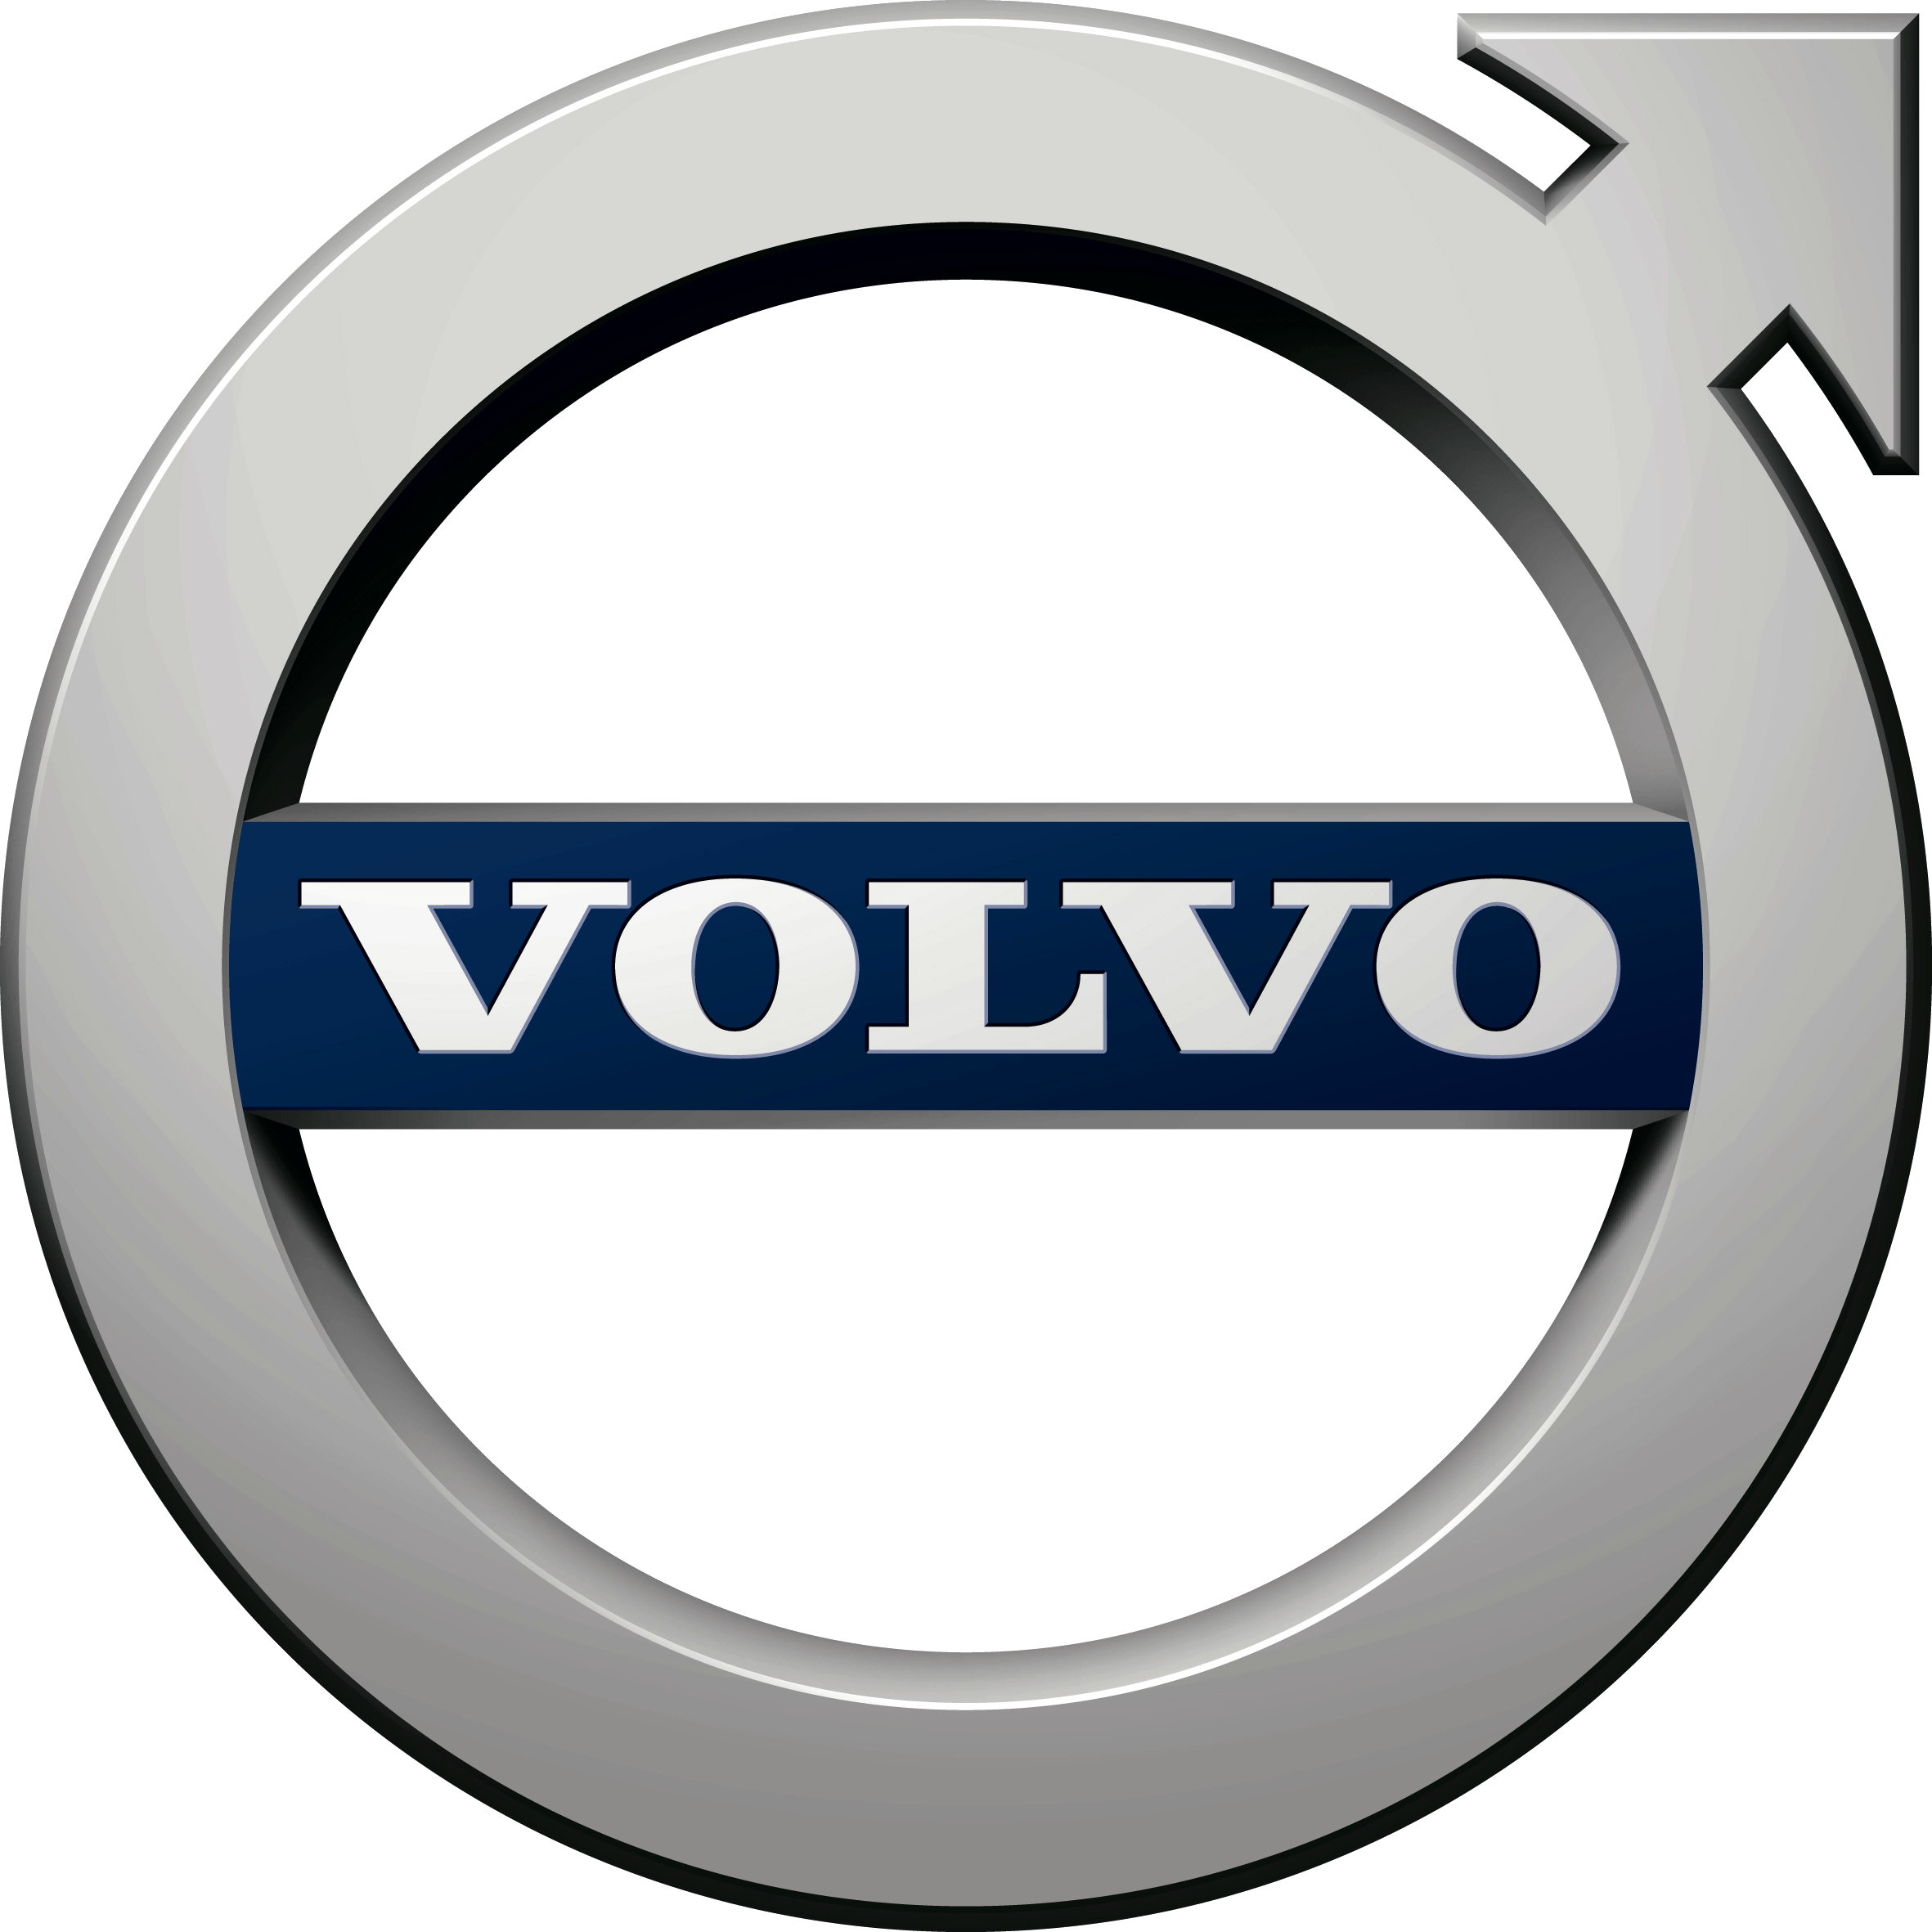 Silver Circle Car Logo - Volvo Logo, Volvo Car Symbol Meaning and History | Car Brand Names.com